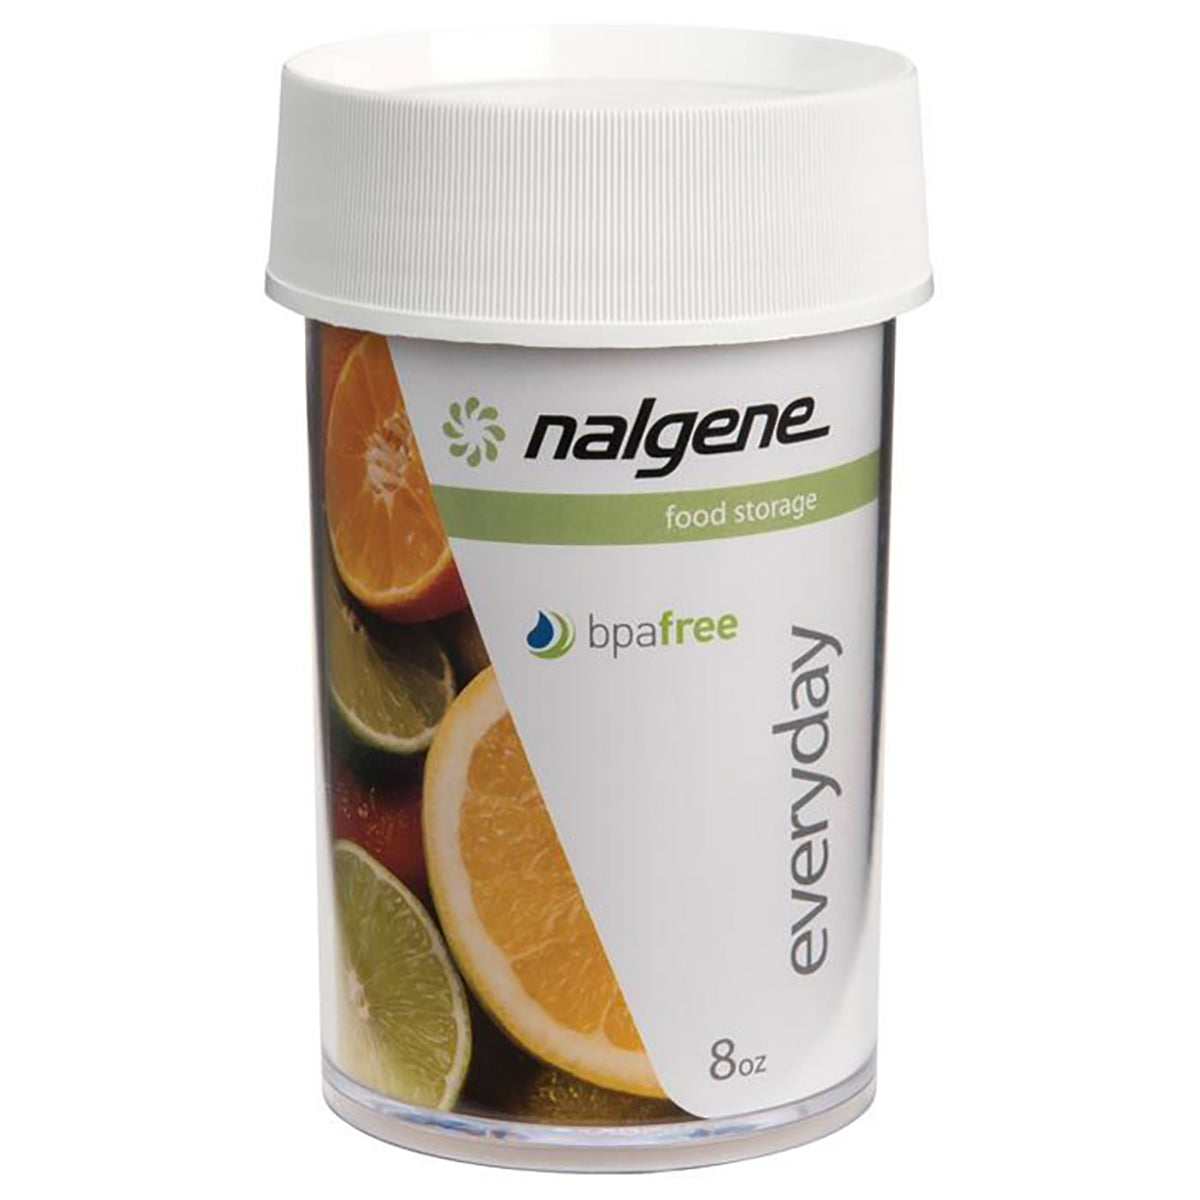 Nalgene Kitchen Storage Container - Clear/White Nalgene